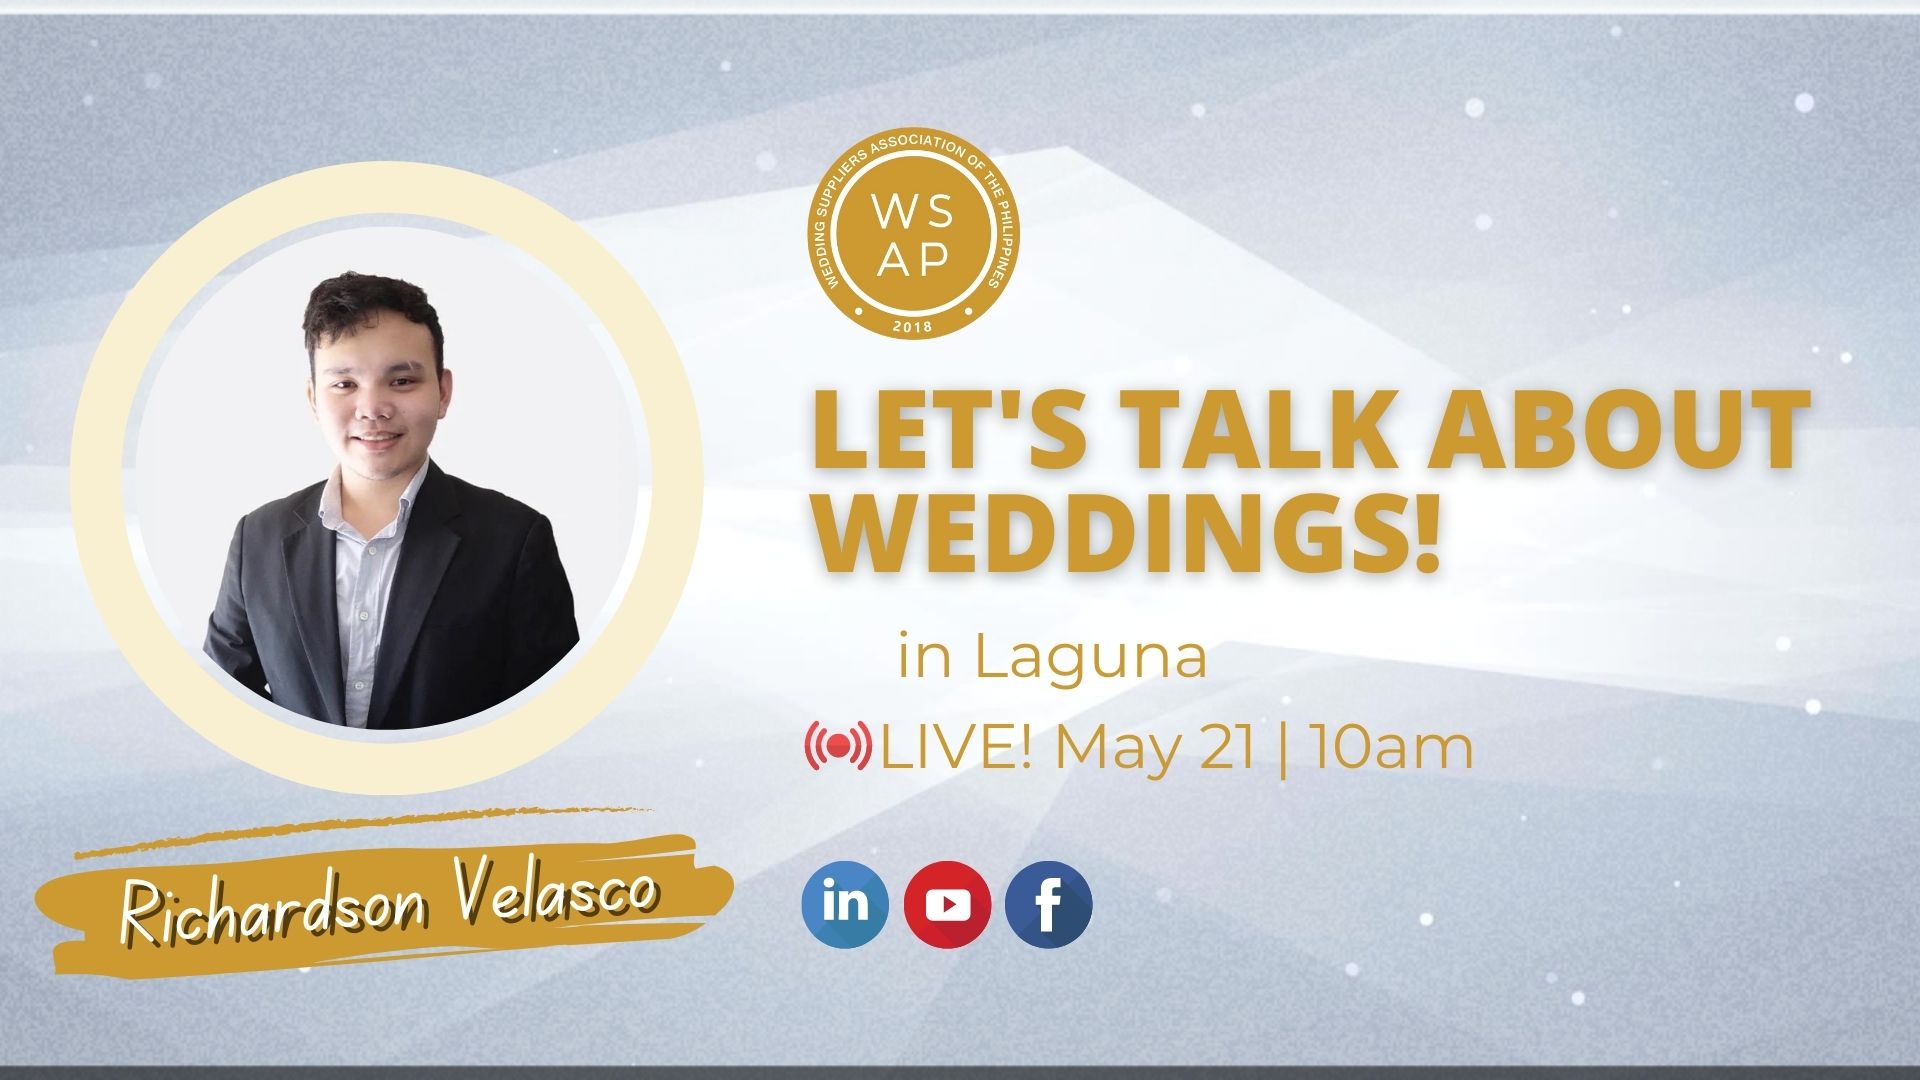 Let's Talk About Weddings in Laguna with Richardson Velasco